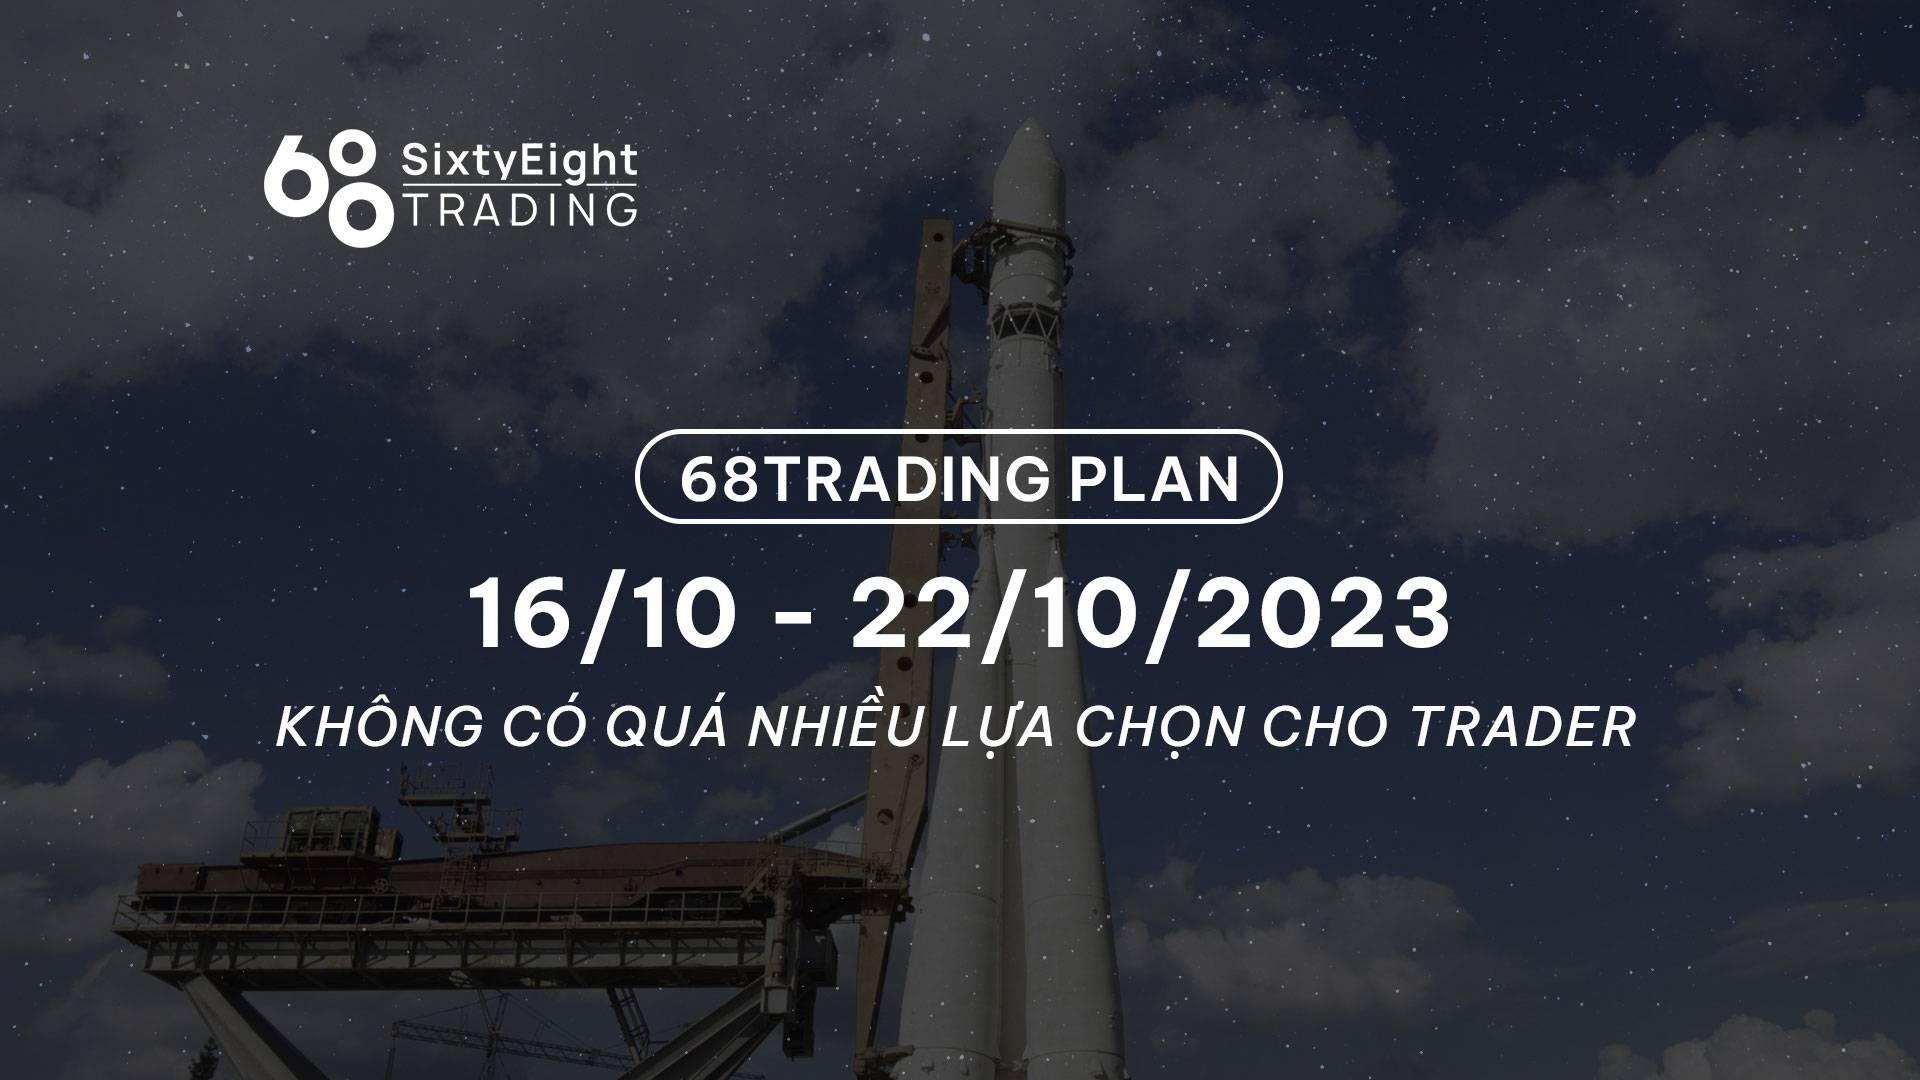 68-trading-plan-1610-22102023-khong-co-qua-nhieu-lua-chon-cho-trader